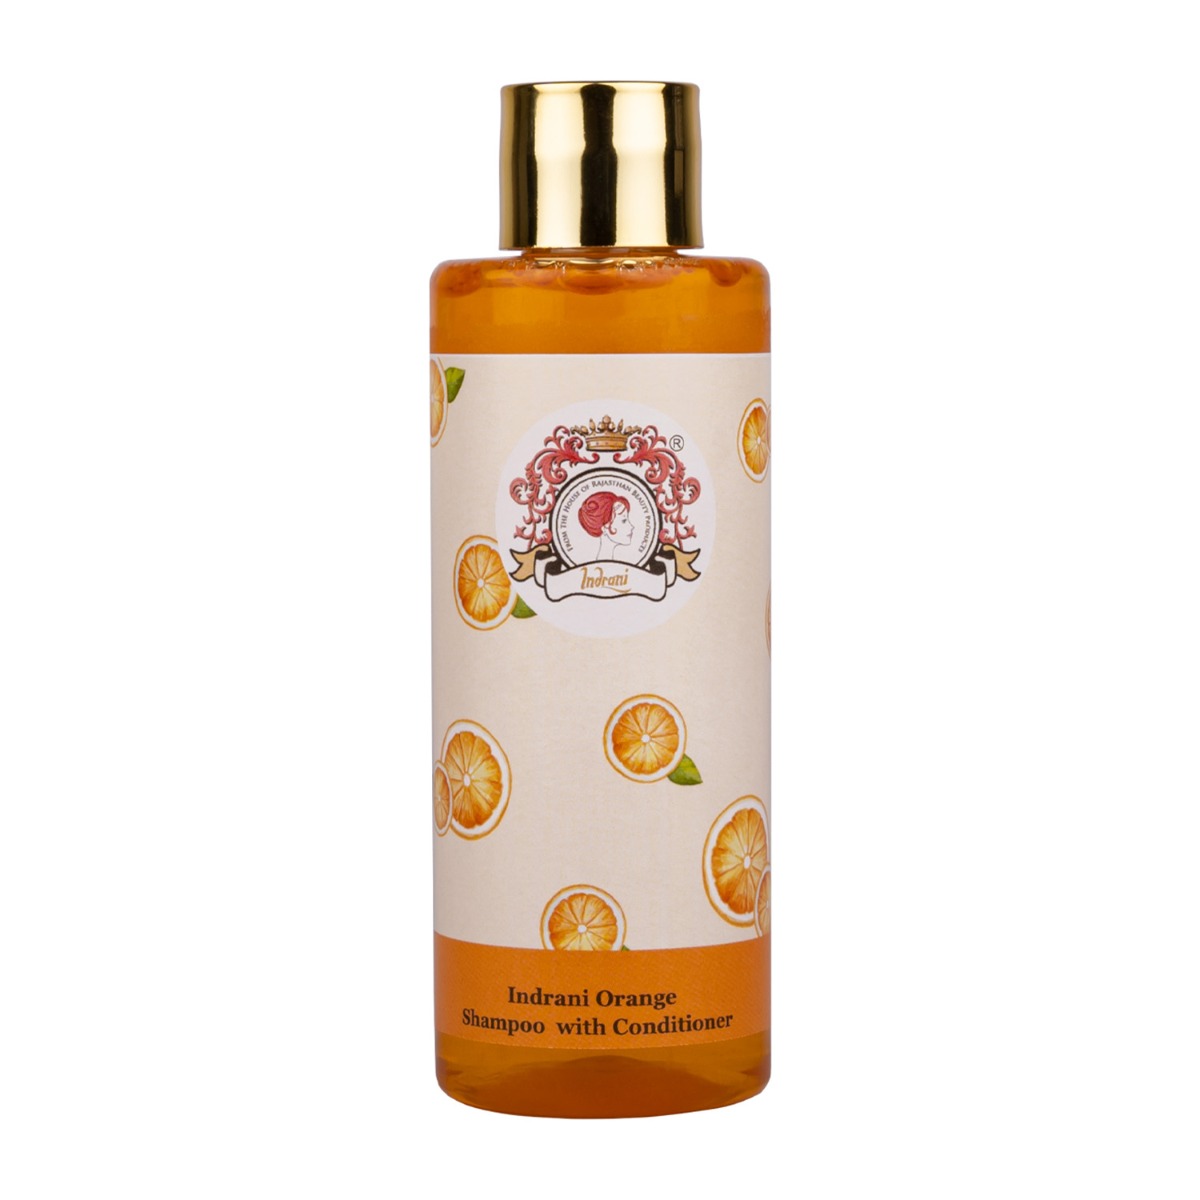 Indrani Orange Shampoo, 100ml